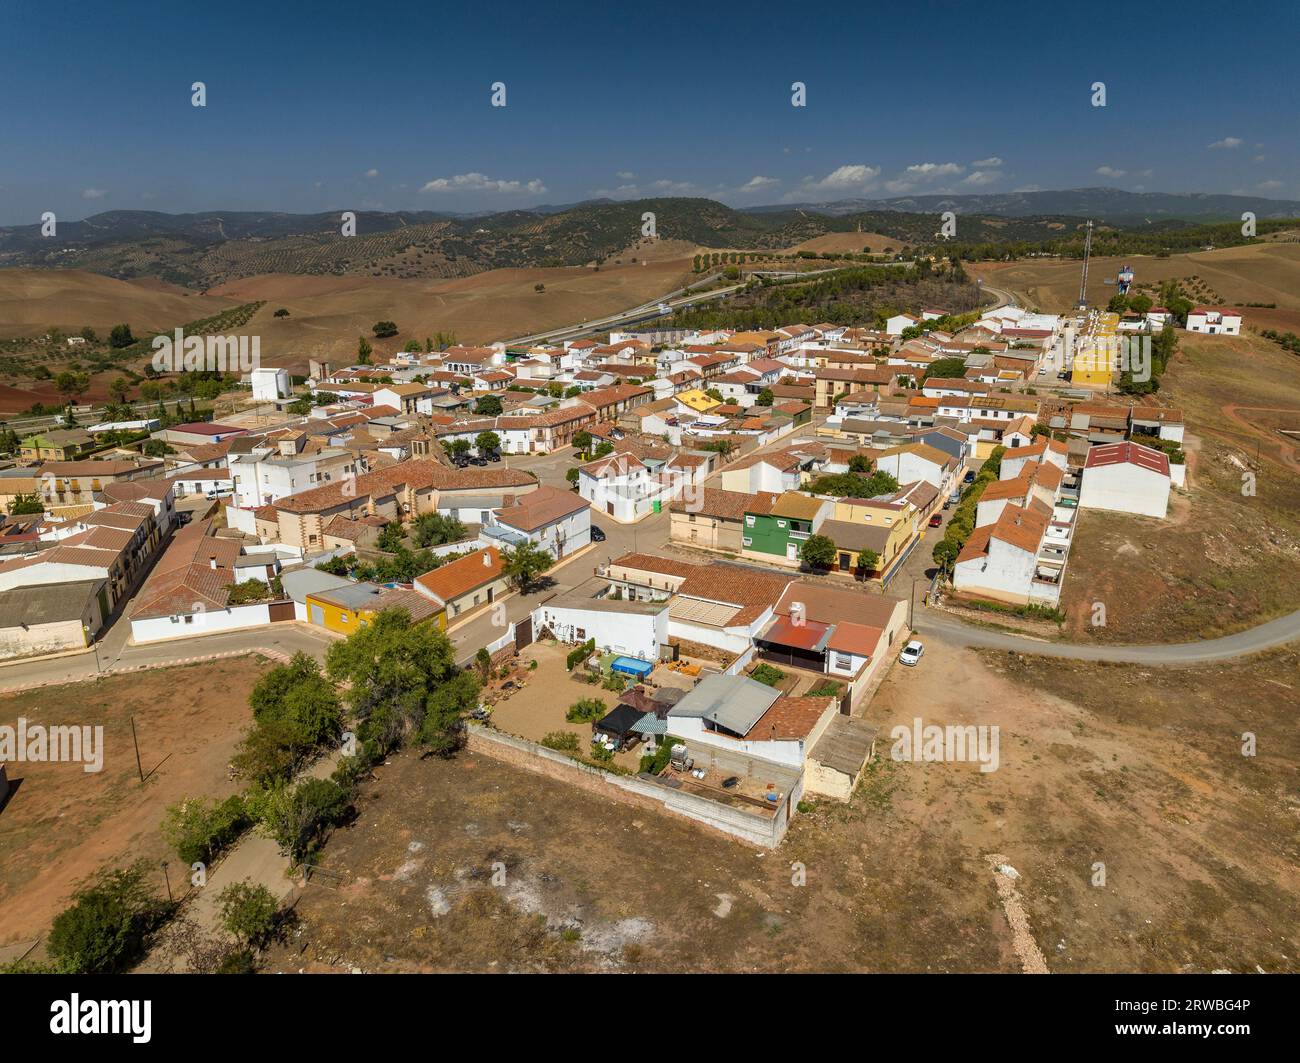 Aerial view of the town of Las Navas de Tolosa (Jaén, Andalusia, Spain) ESP: Vista aérea del pueblo de las Navas de Tolosa (Jaén, Andalucía, España) Stock Photo